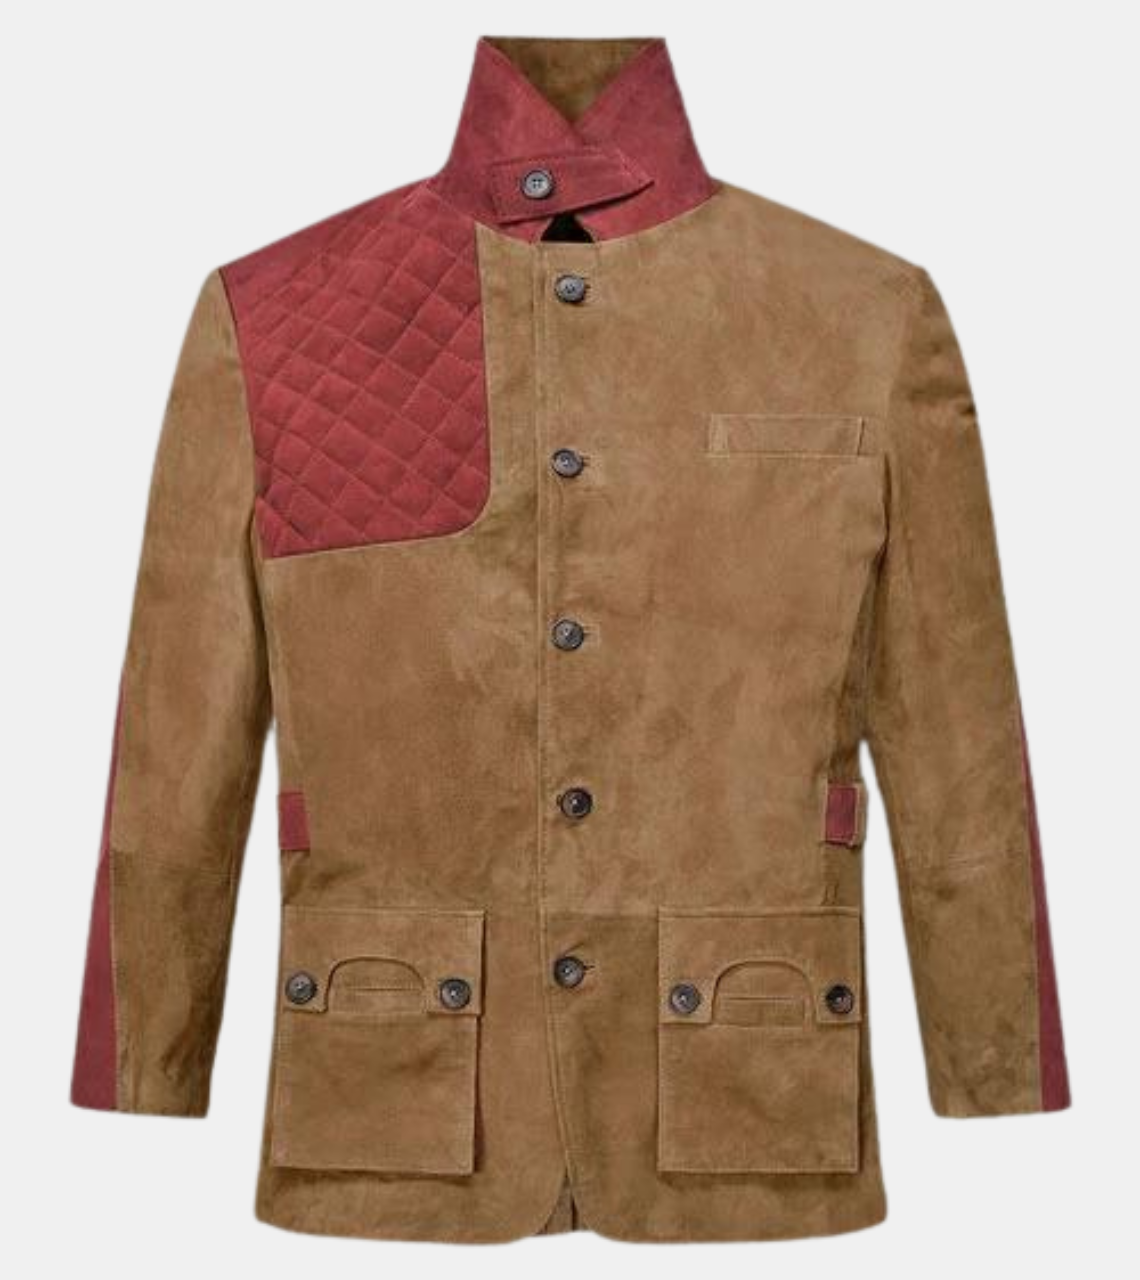  Adrain Men's Bronze Suede Leather Jacket 